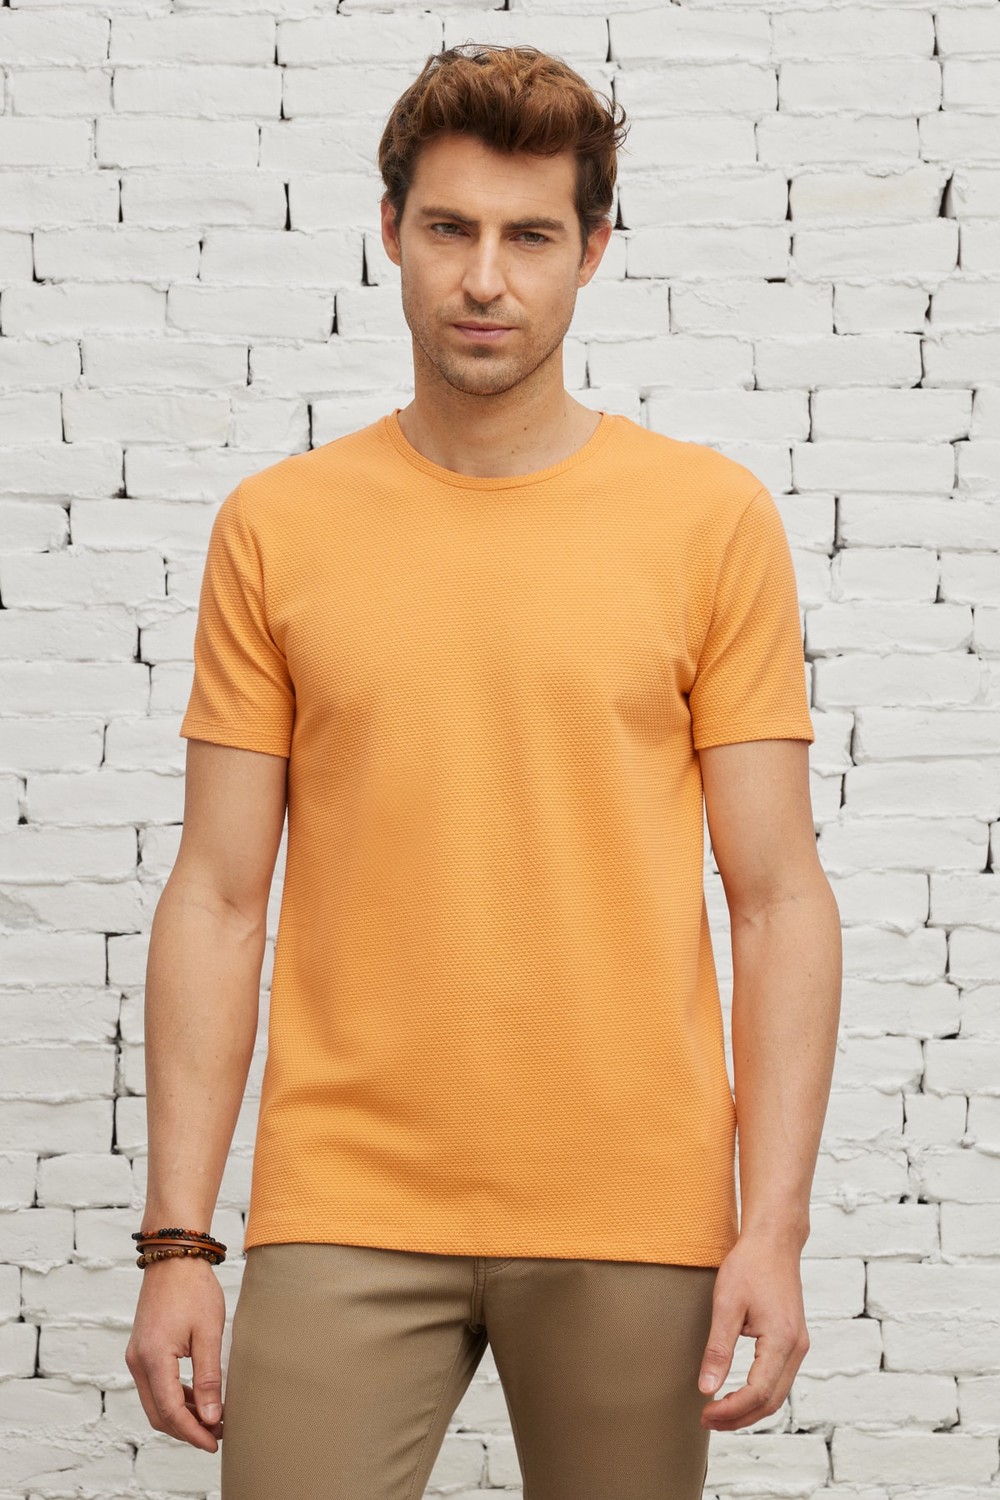 ALTINYILDIZ CLASSICS Men's Melon Juice Slim Fit Slim Fit Crew Neck Short Sleeved Basic T-Shirt with Soft Touches.